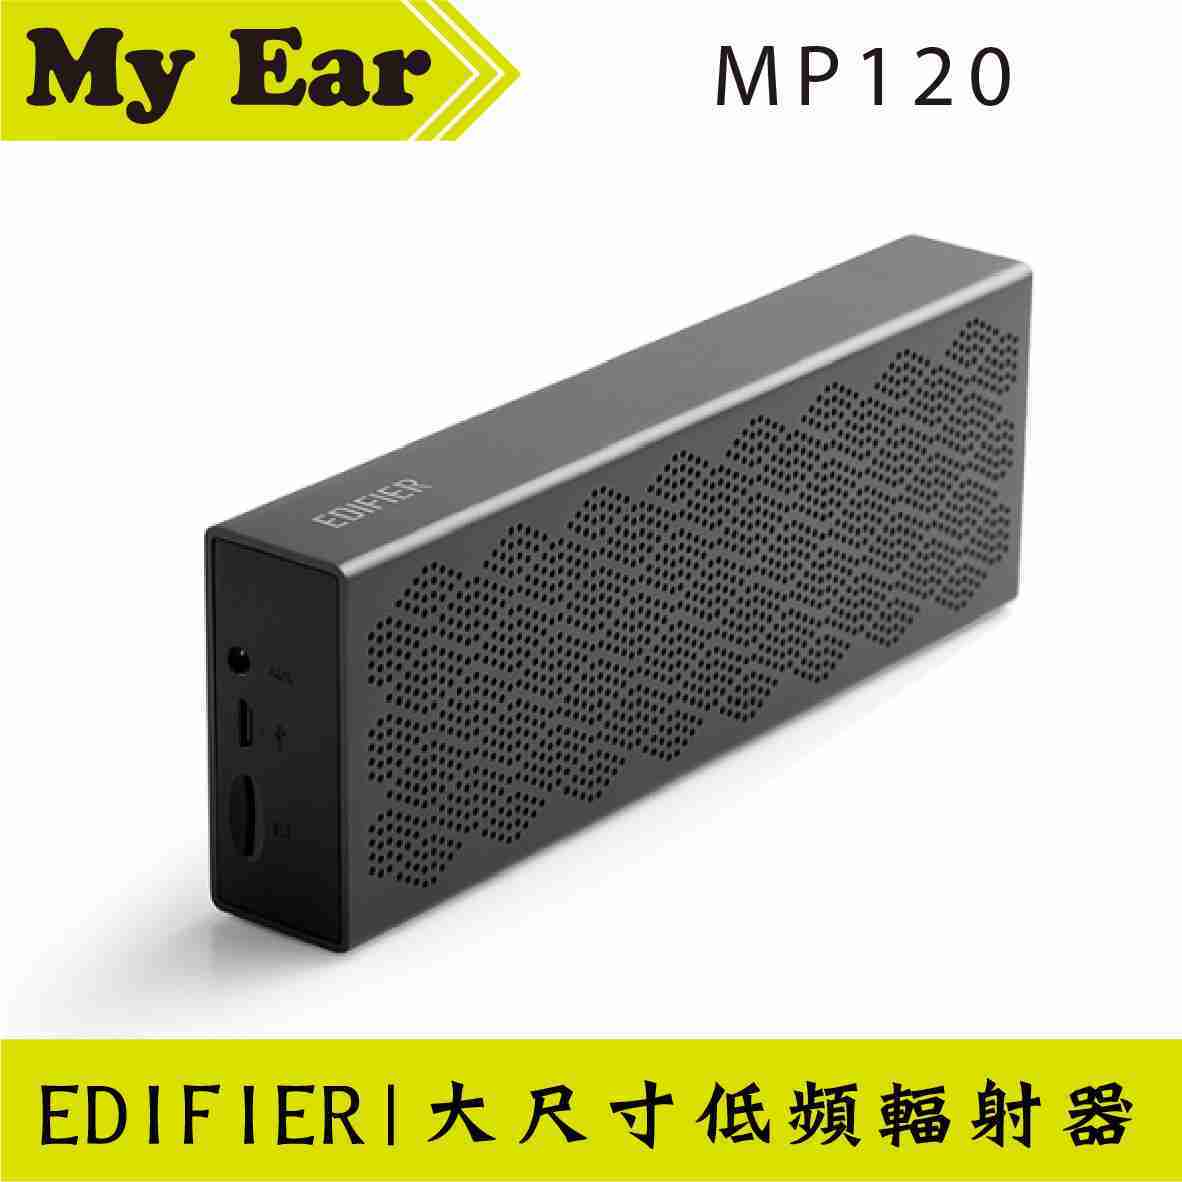 EDIFIER 漫步者 MP120 可攜式藍牙喇叭 支援TF卡播放 | My Ear 耳機專門店